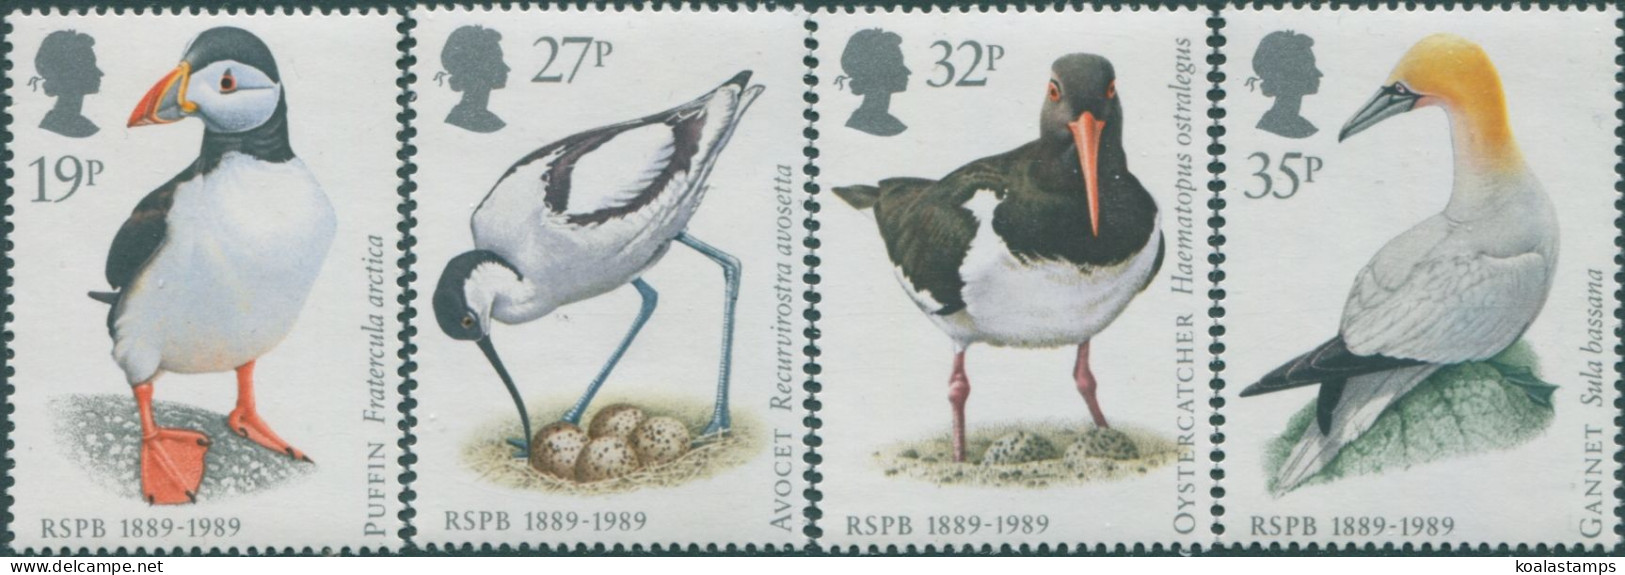 Great Britain 1989 SG1419-1422 QEII Birds Set MNH - Unclassified